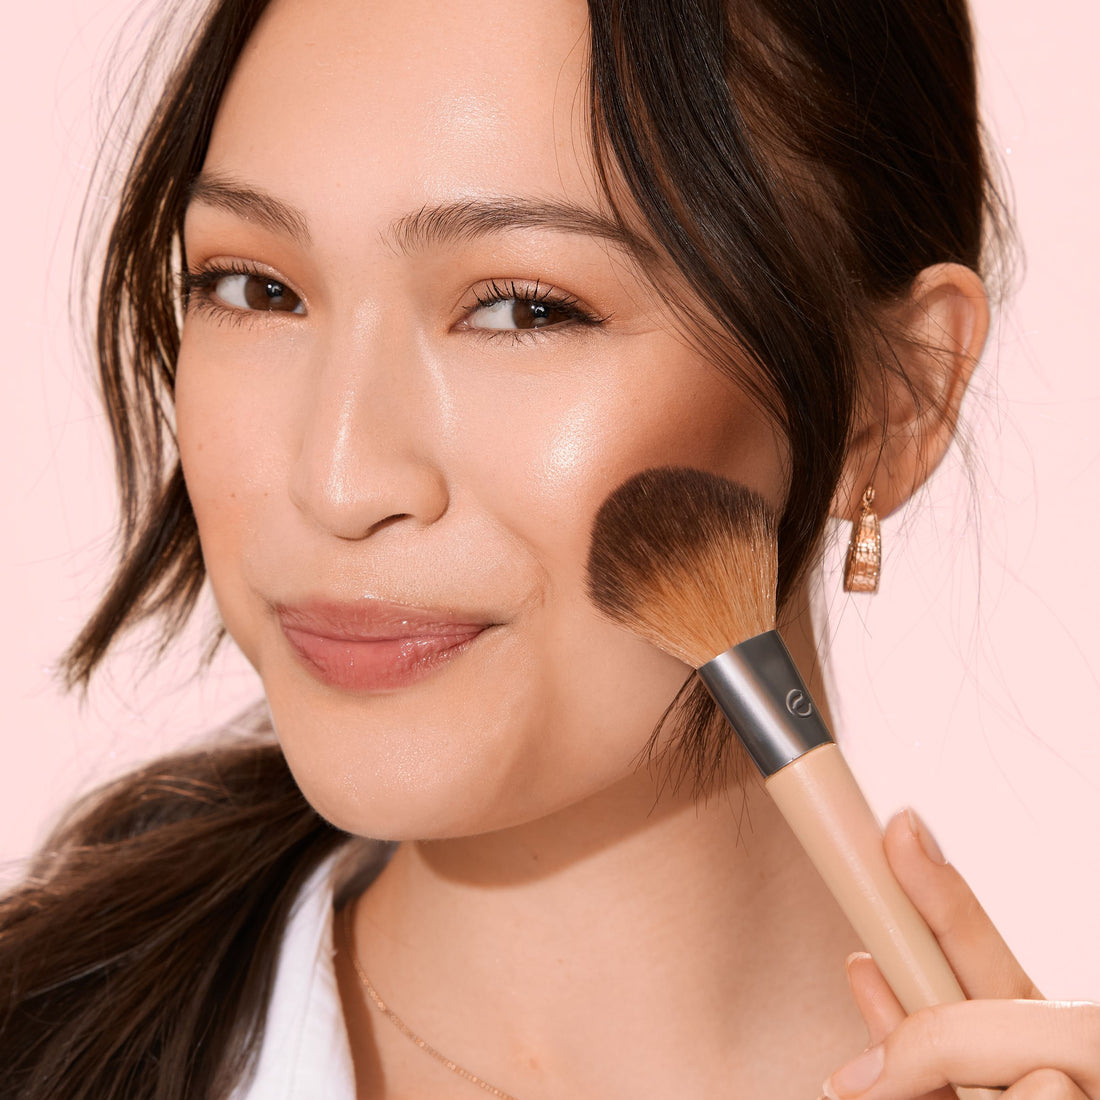 Daily Defined Eye Makeup Brush Kit – EcoTools Beauty